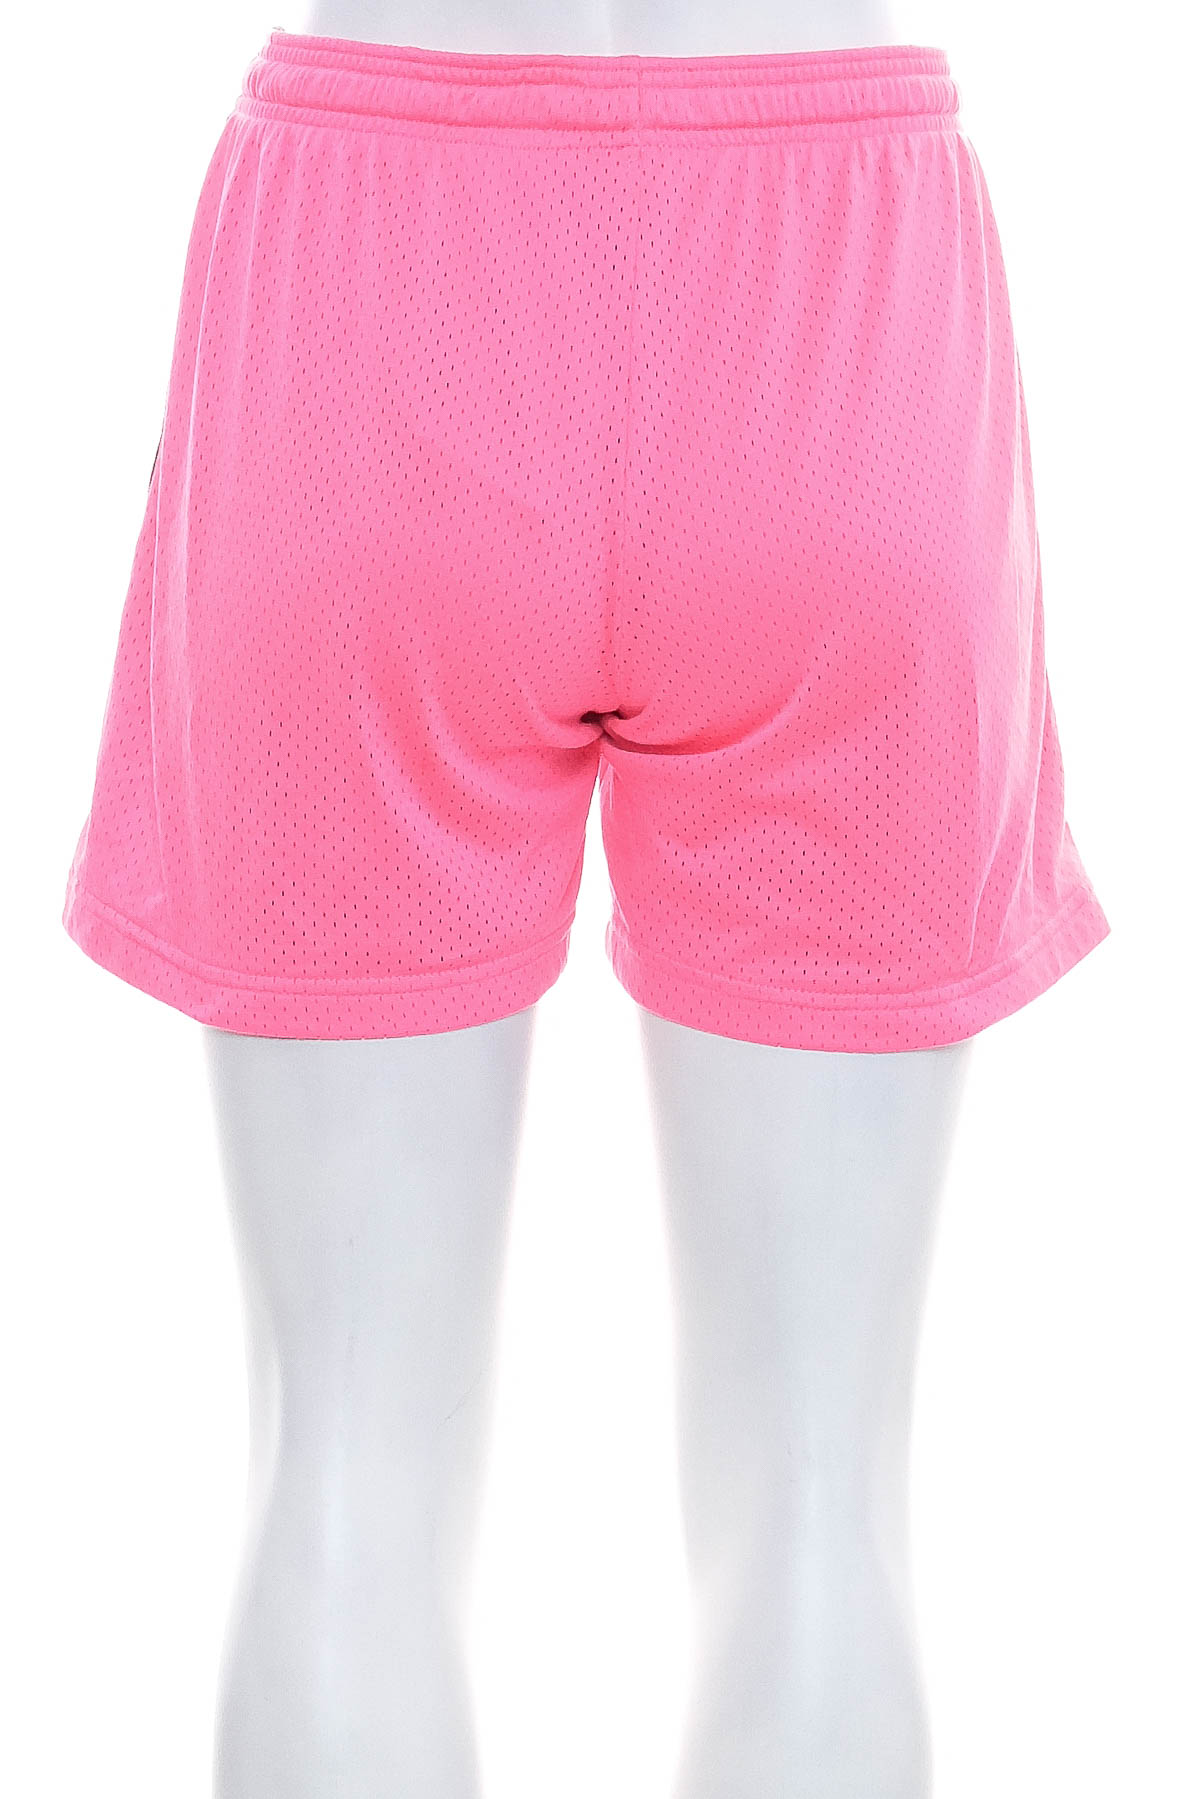 Female shorts - Crane - 1